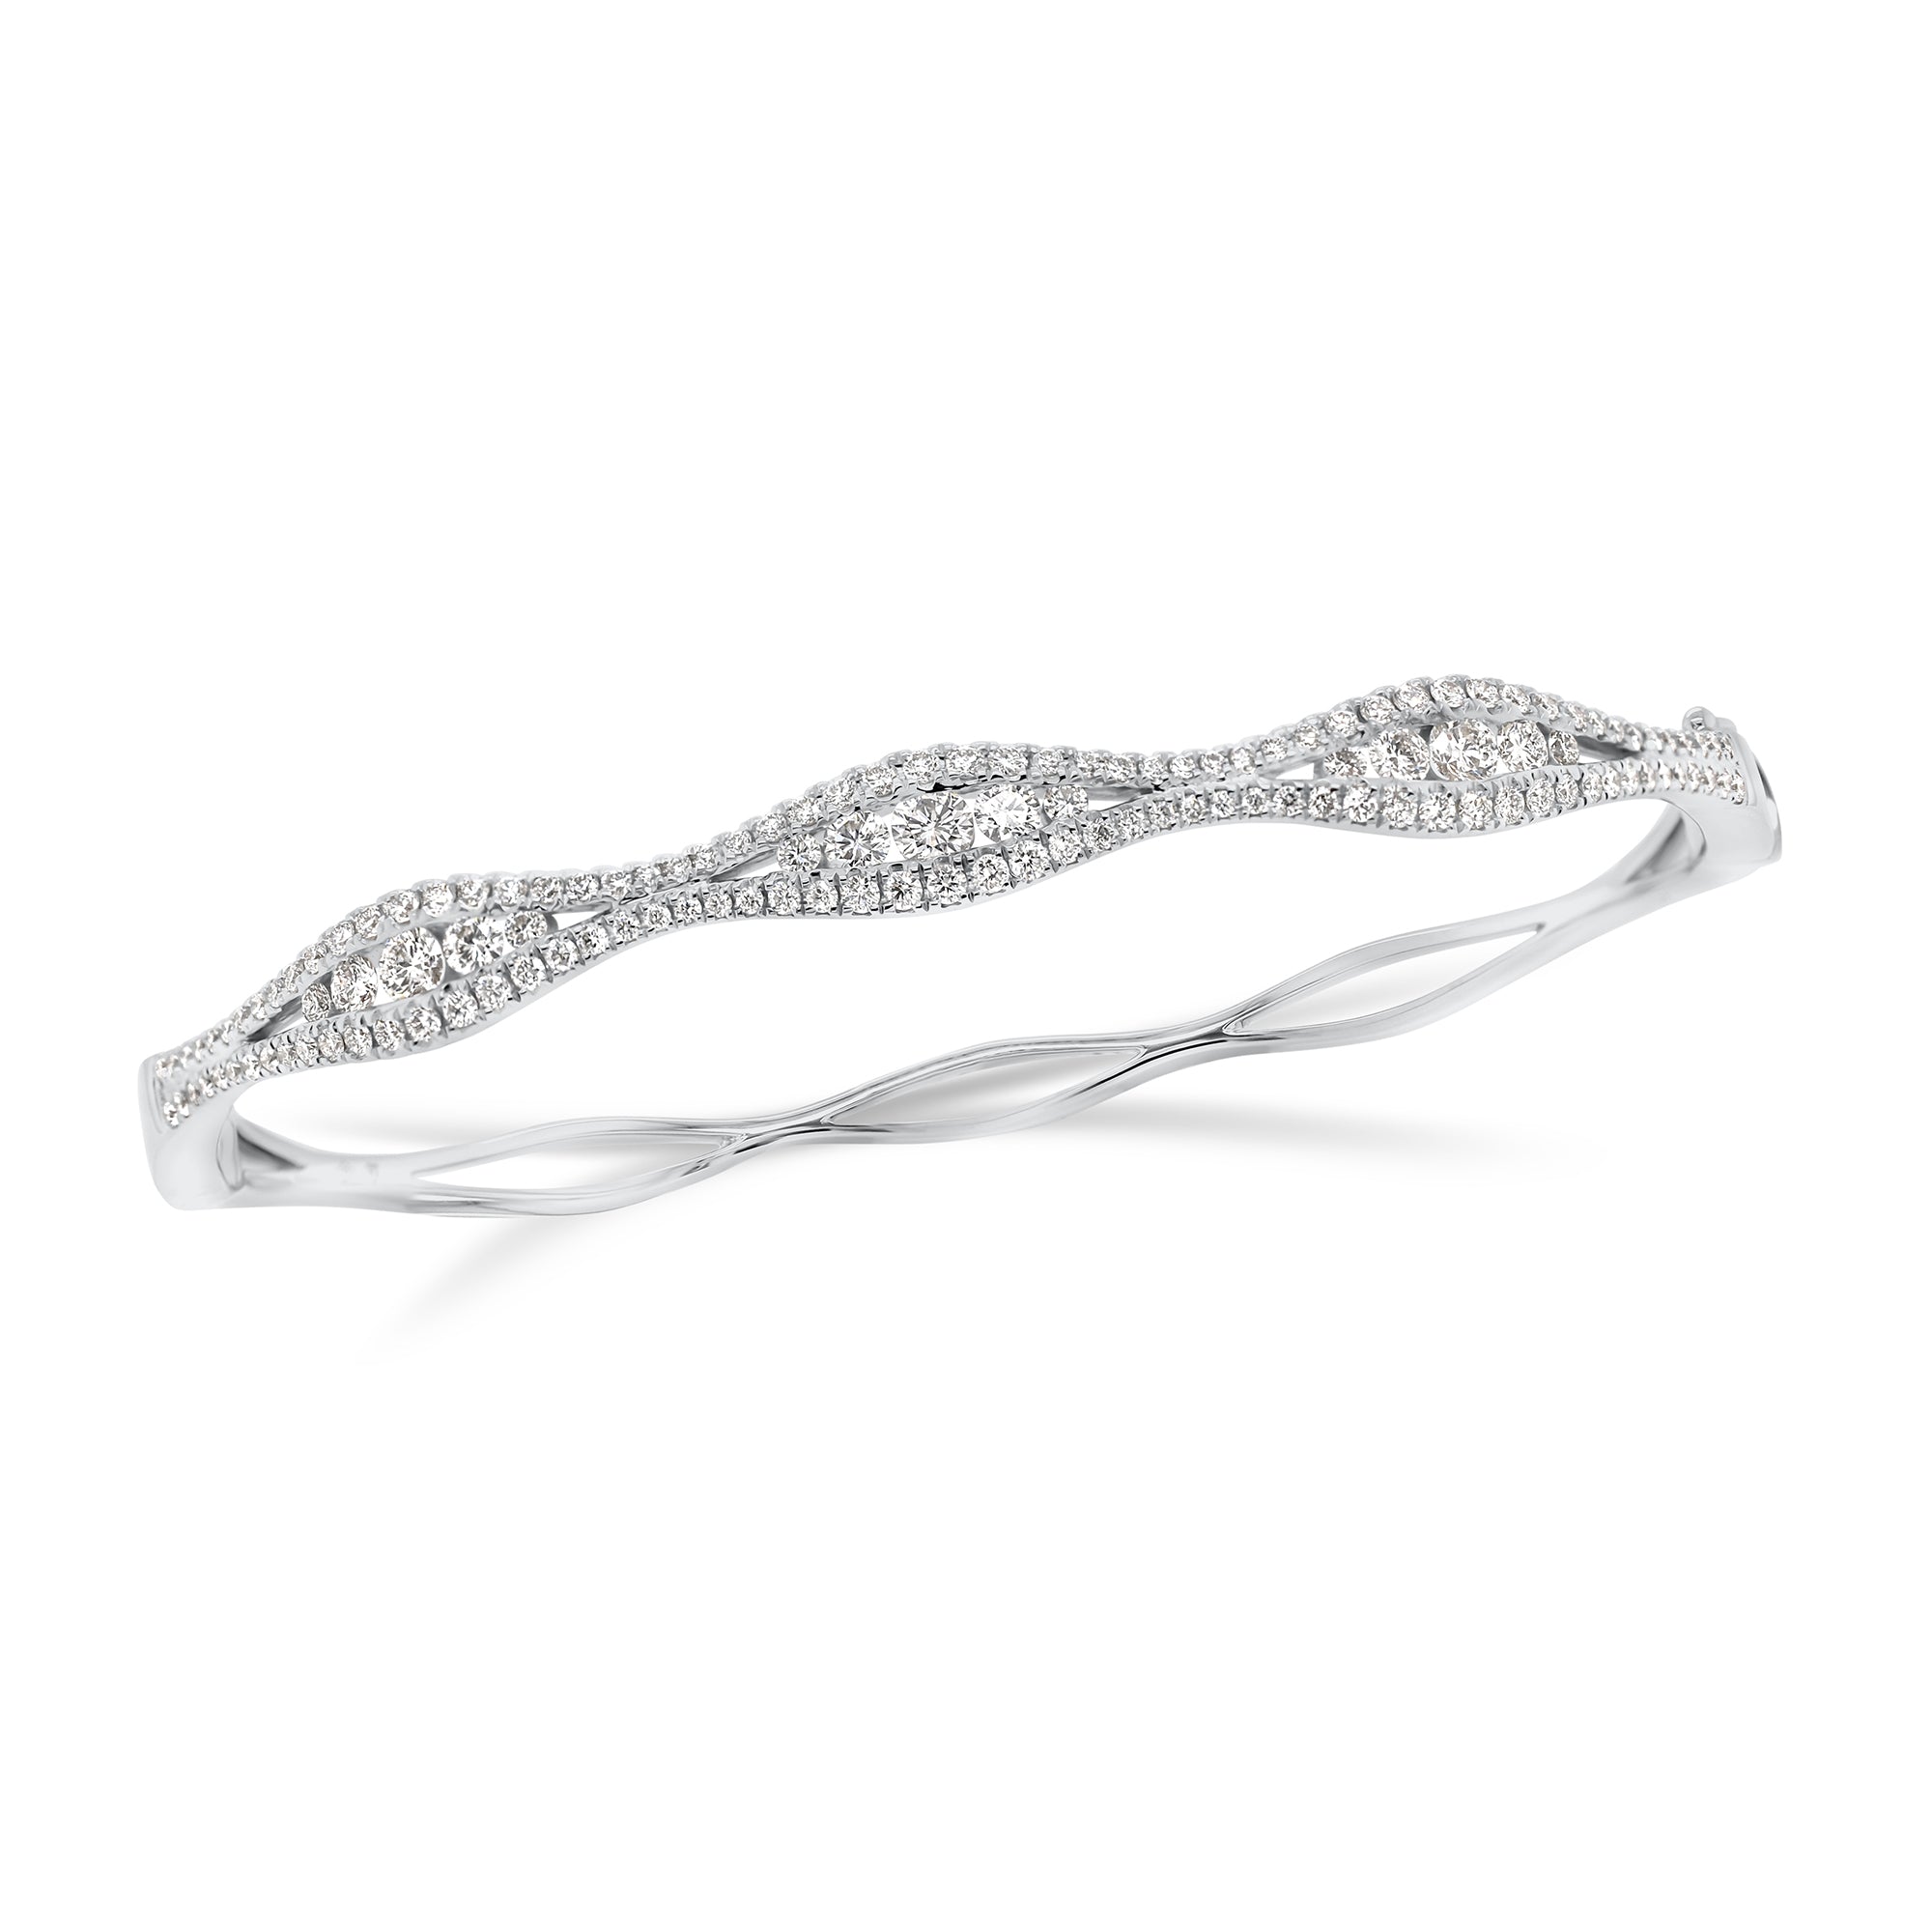 Diamond Open Wave Bangle Bracelet - 18K white gold weighing 13.05 grams - 129 round diamonds totaling 1.28 carats